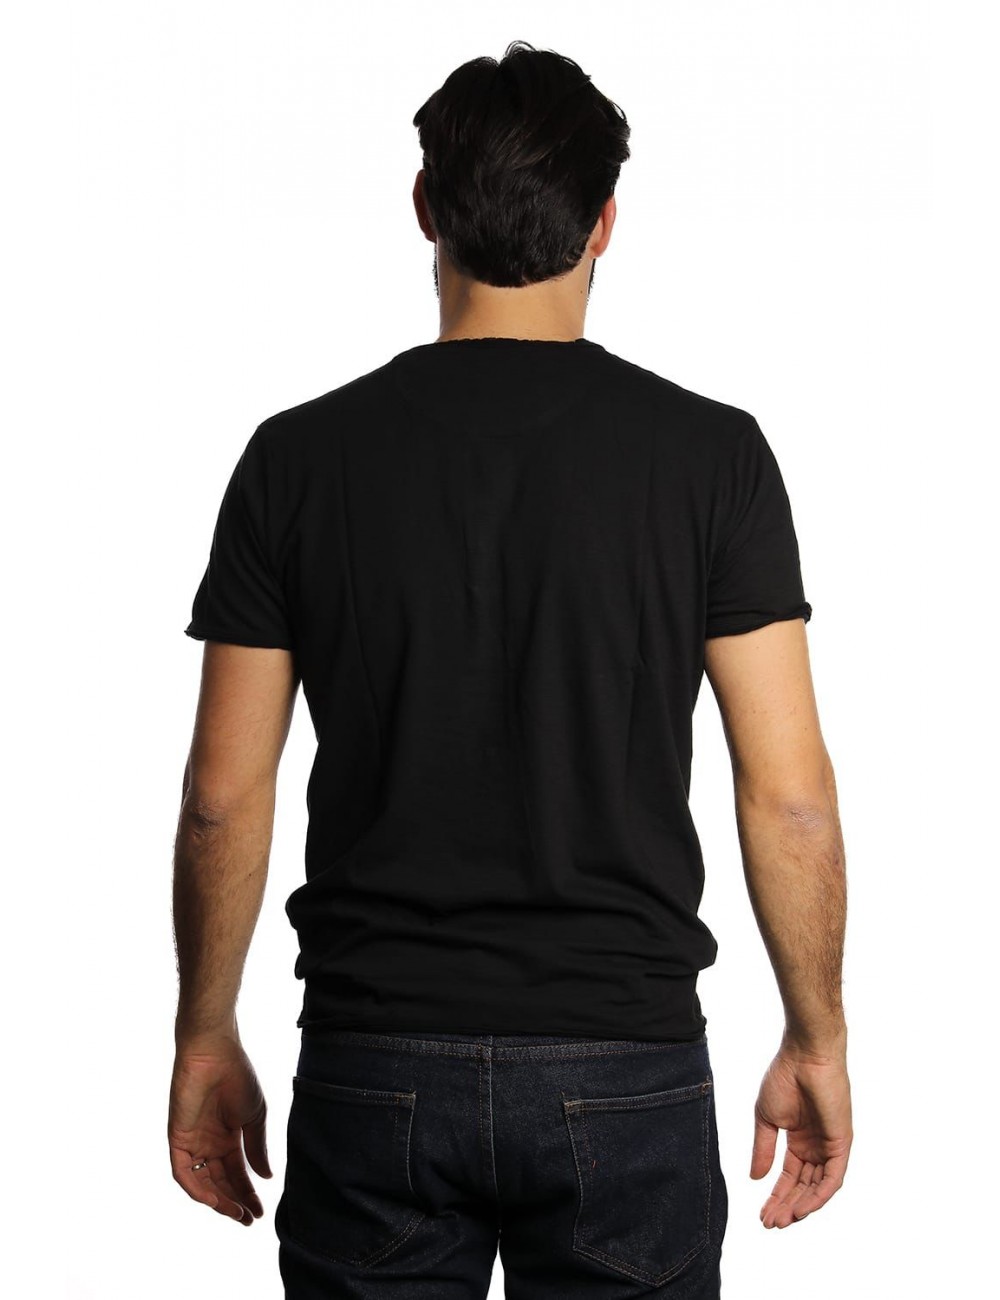 t-shirt censured UOMO BLACK - TM 2947 T JSSG 90 vista frontale indossata